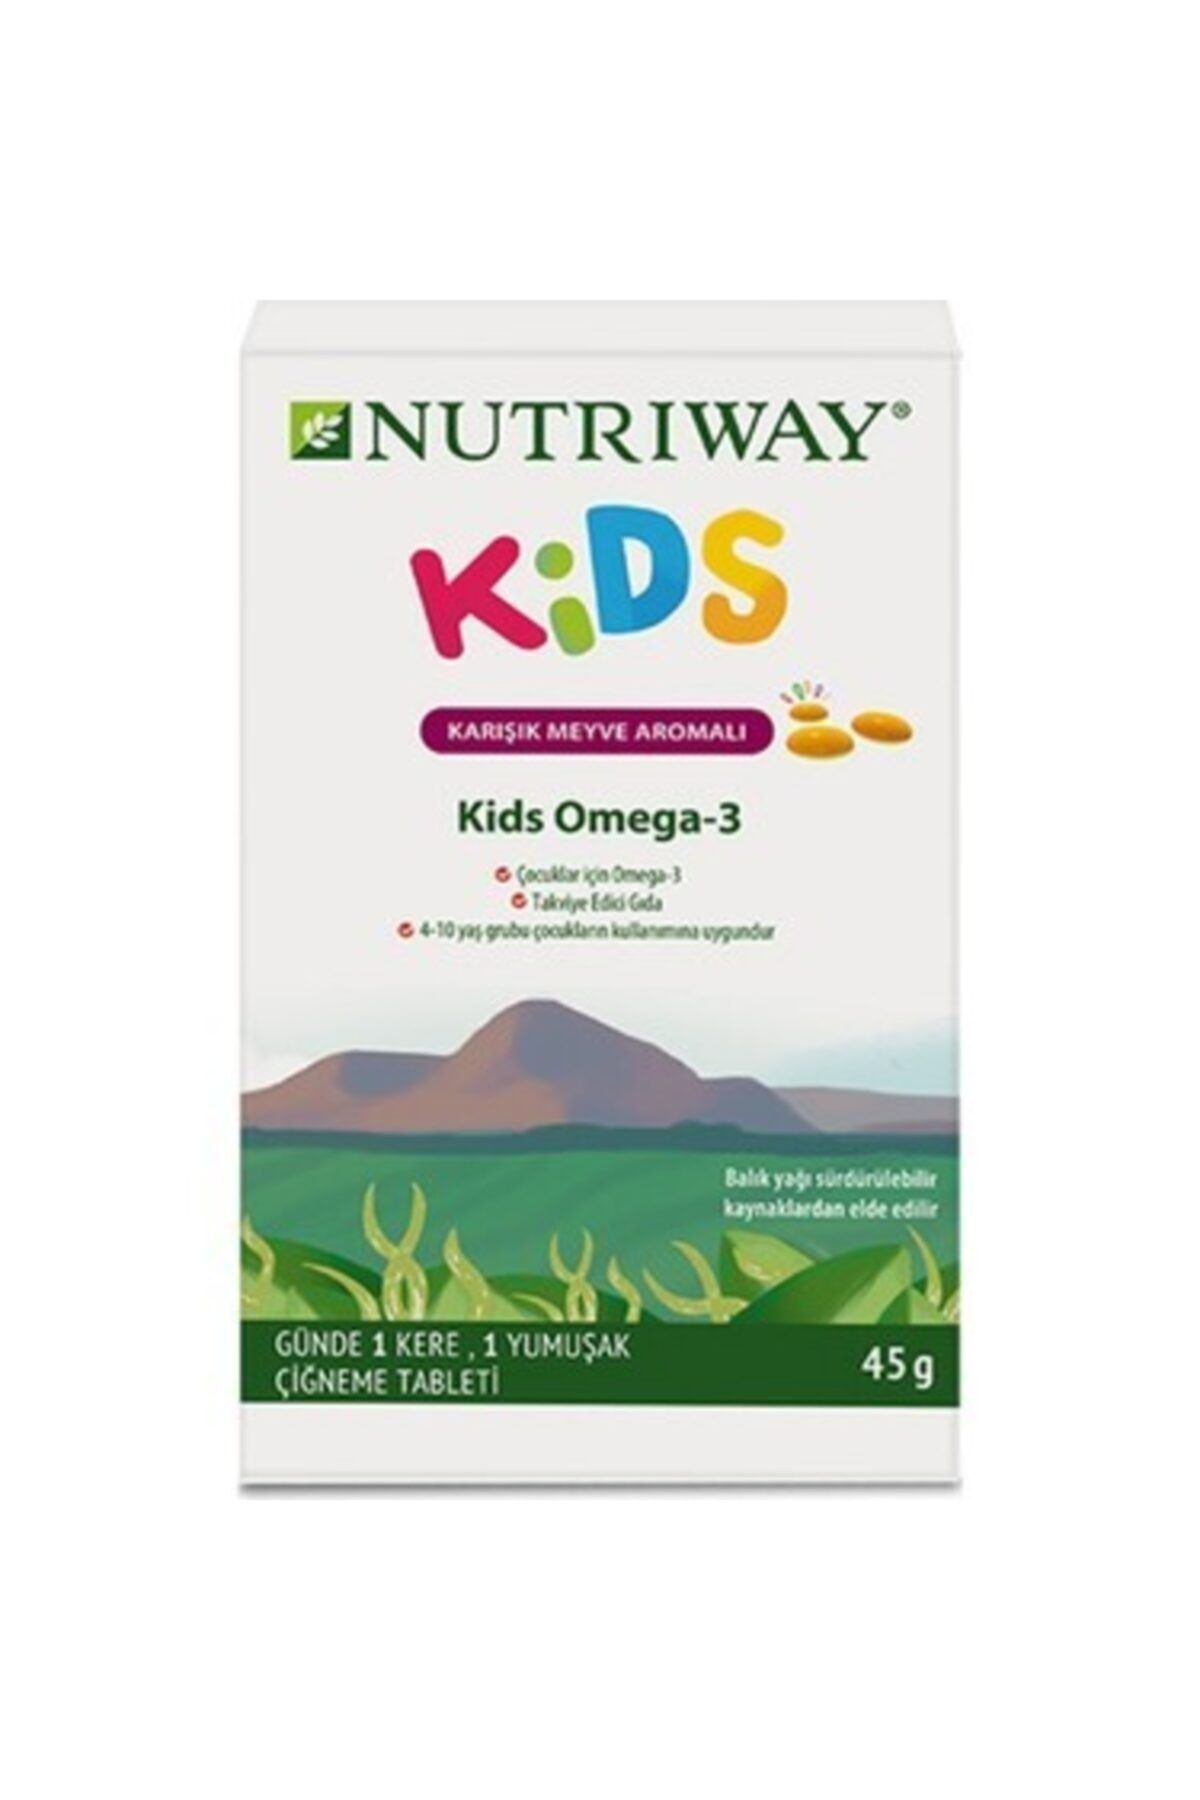 Nutriway Amway Kids Omega -3 Nutrıway 45 G Ambalaj Her Birinde 15 Yumuşak Çiğneme Tablet